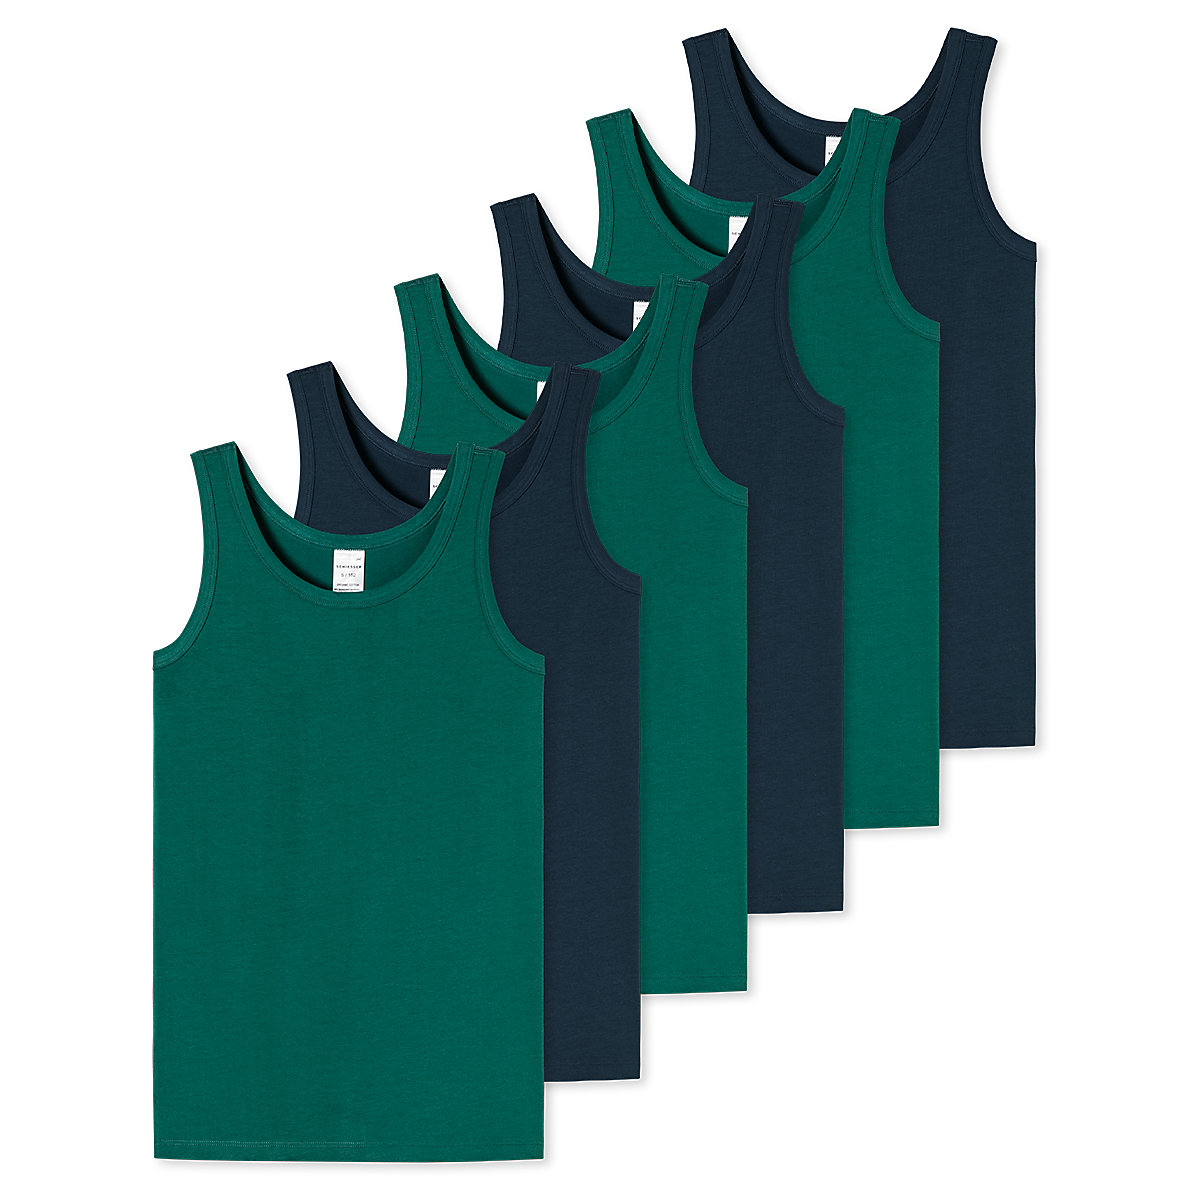 SCHIESSER Unterhemd / Tanktop 6er Pack Teens Boys 95/5 Organic Cotton Unterhemden für Jungen grün